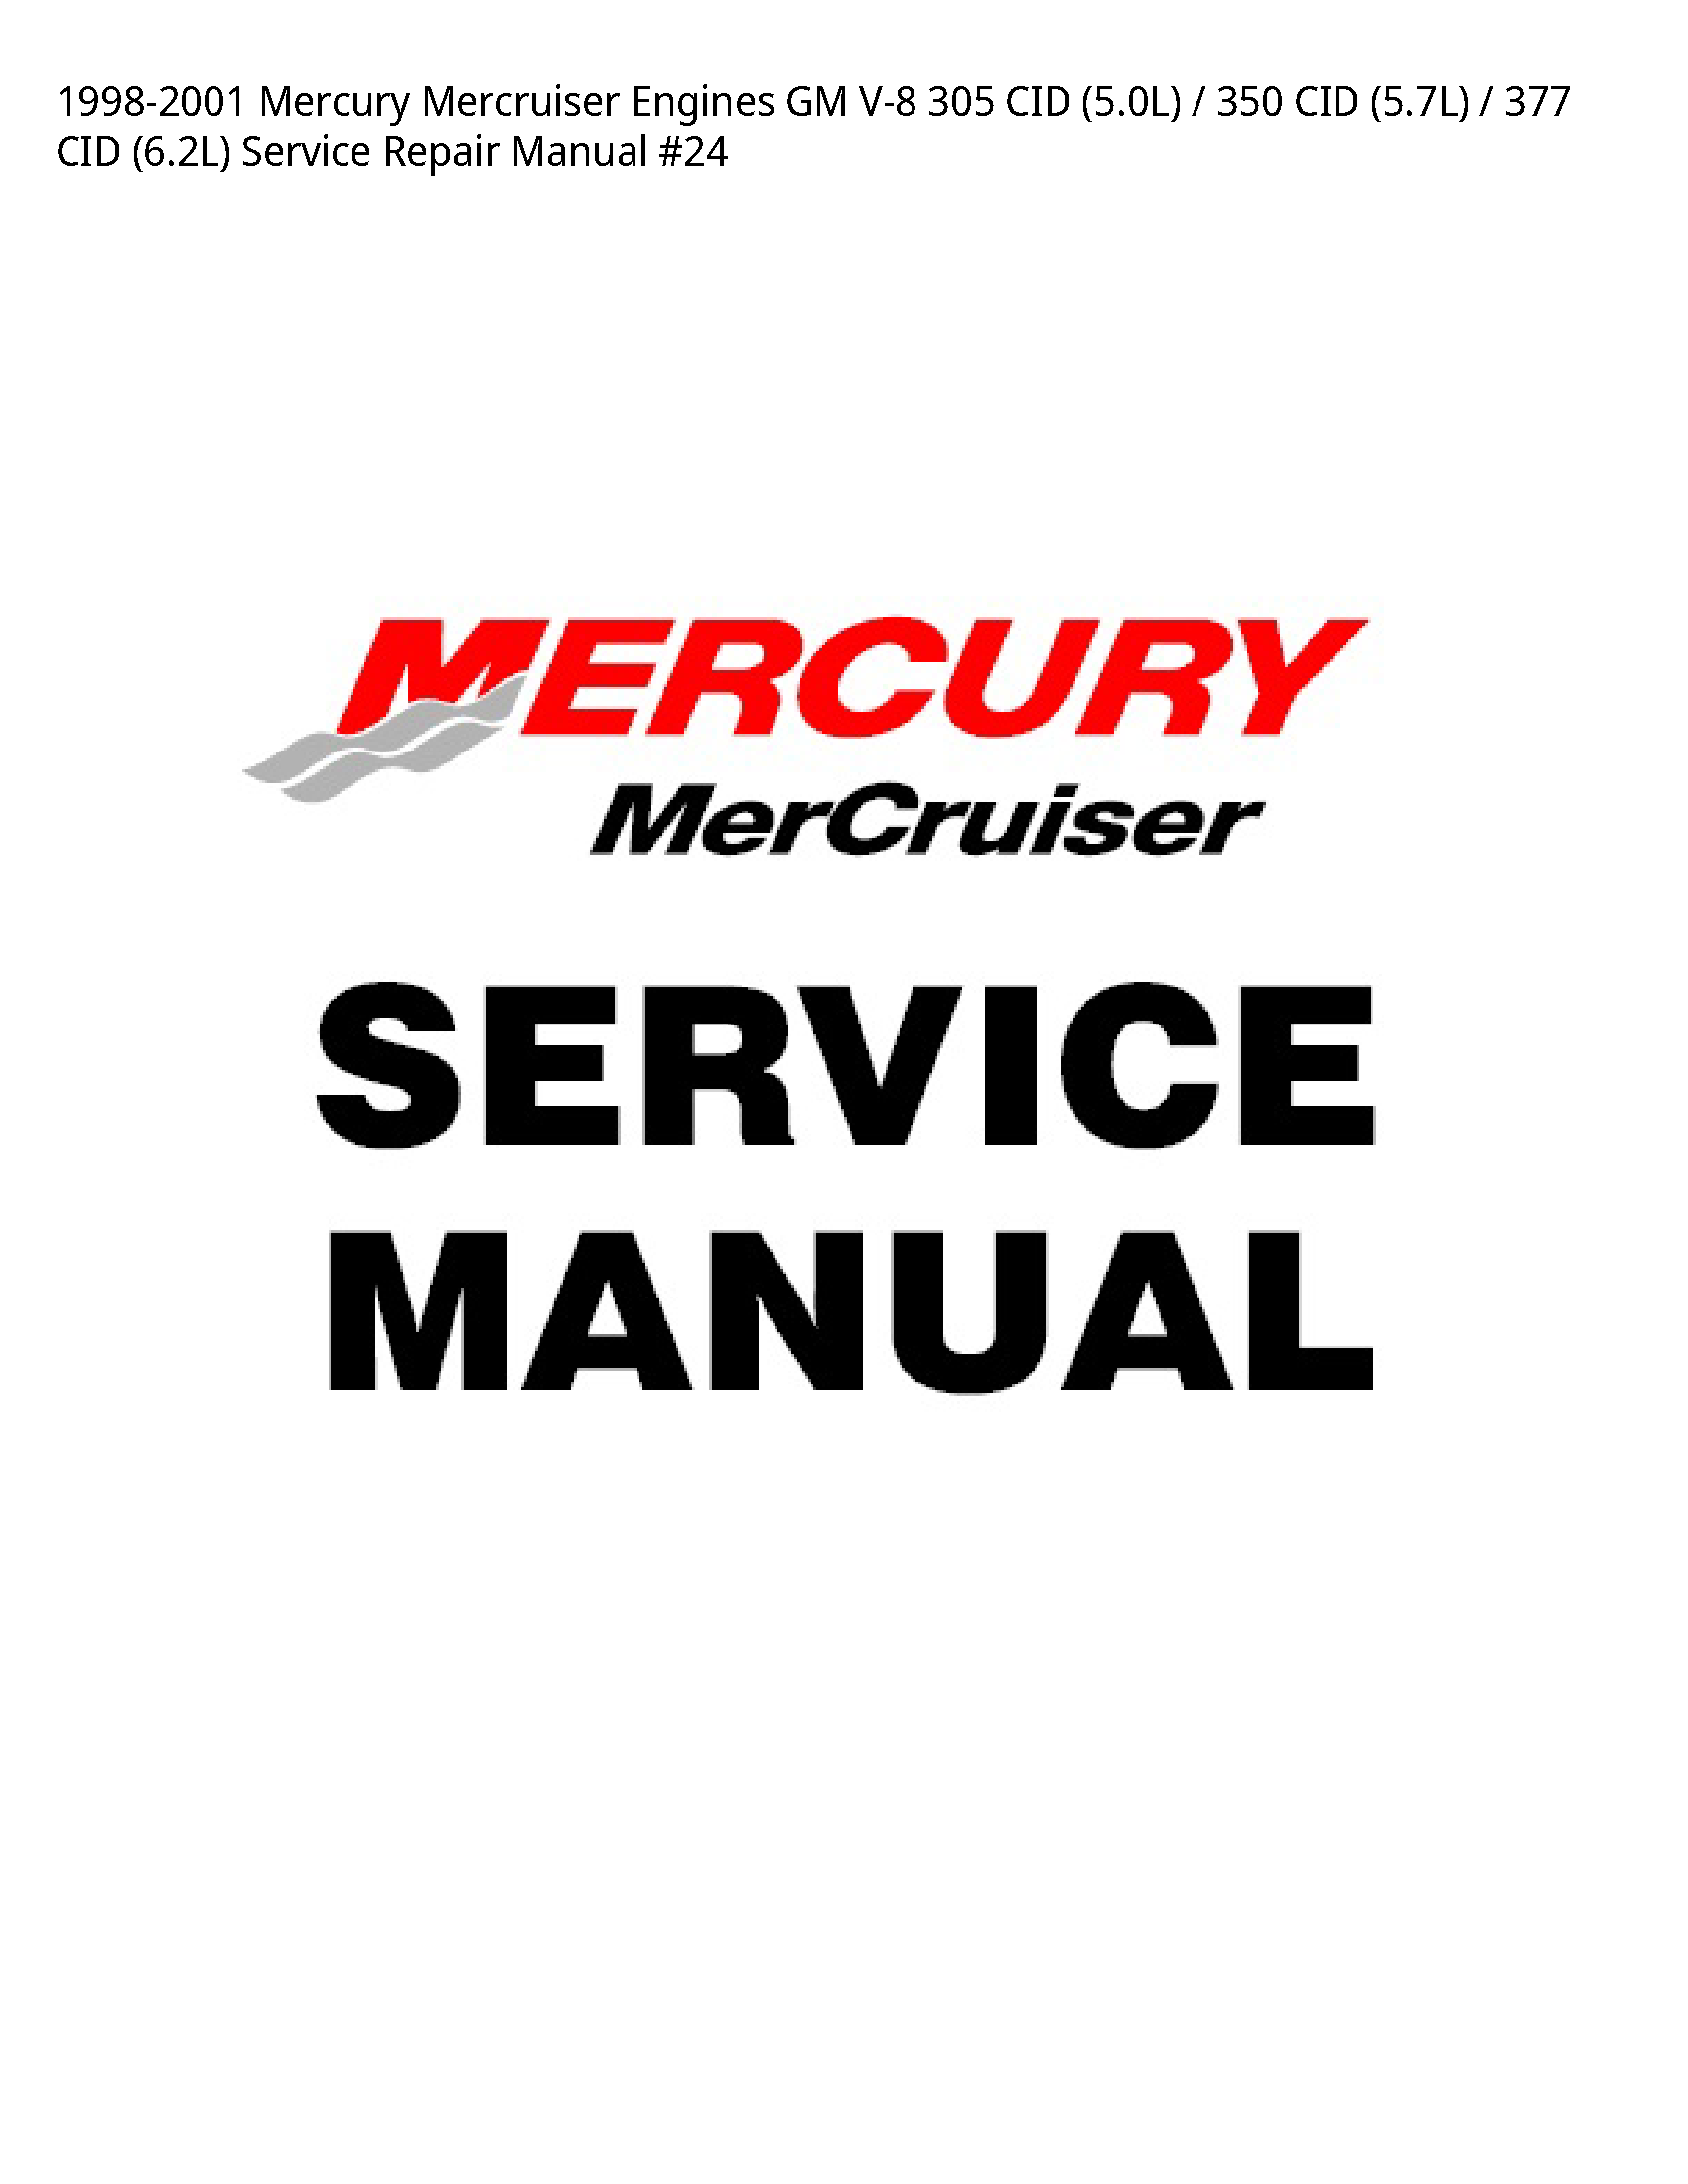 Mercury V-8 Mercruiser Engines GM CID CID CID manual